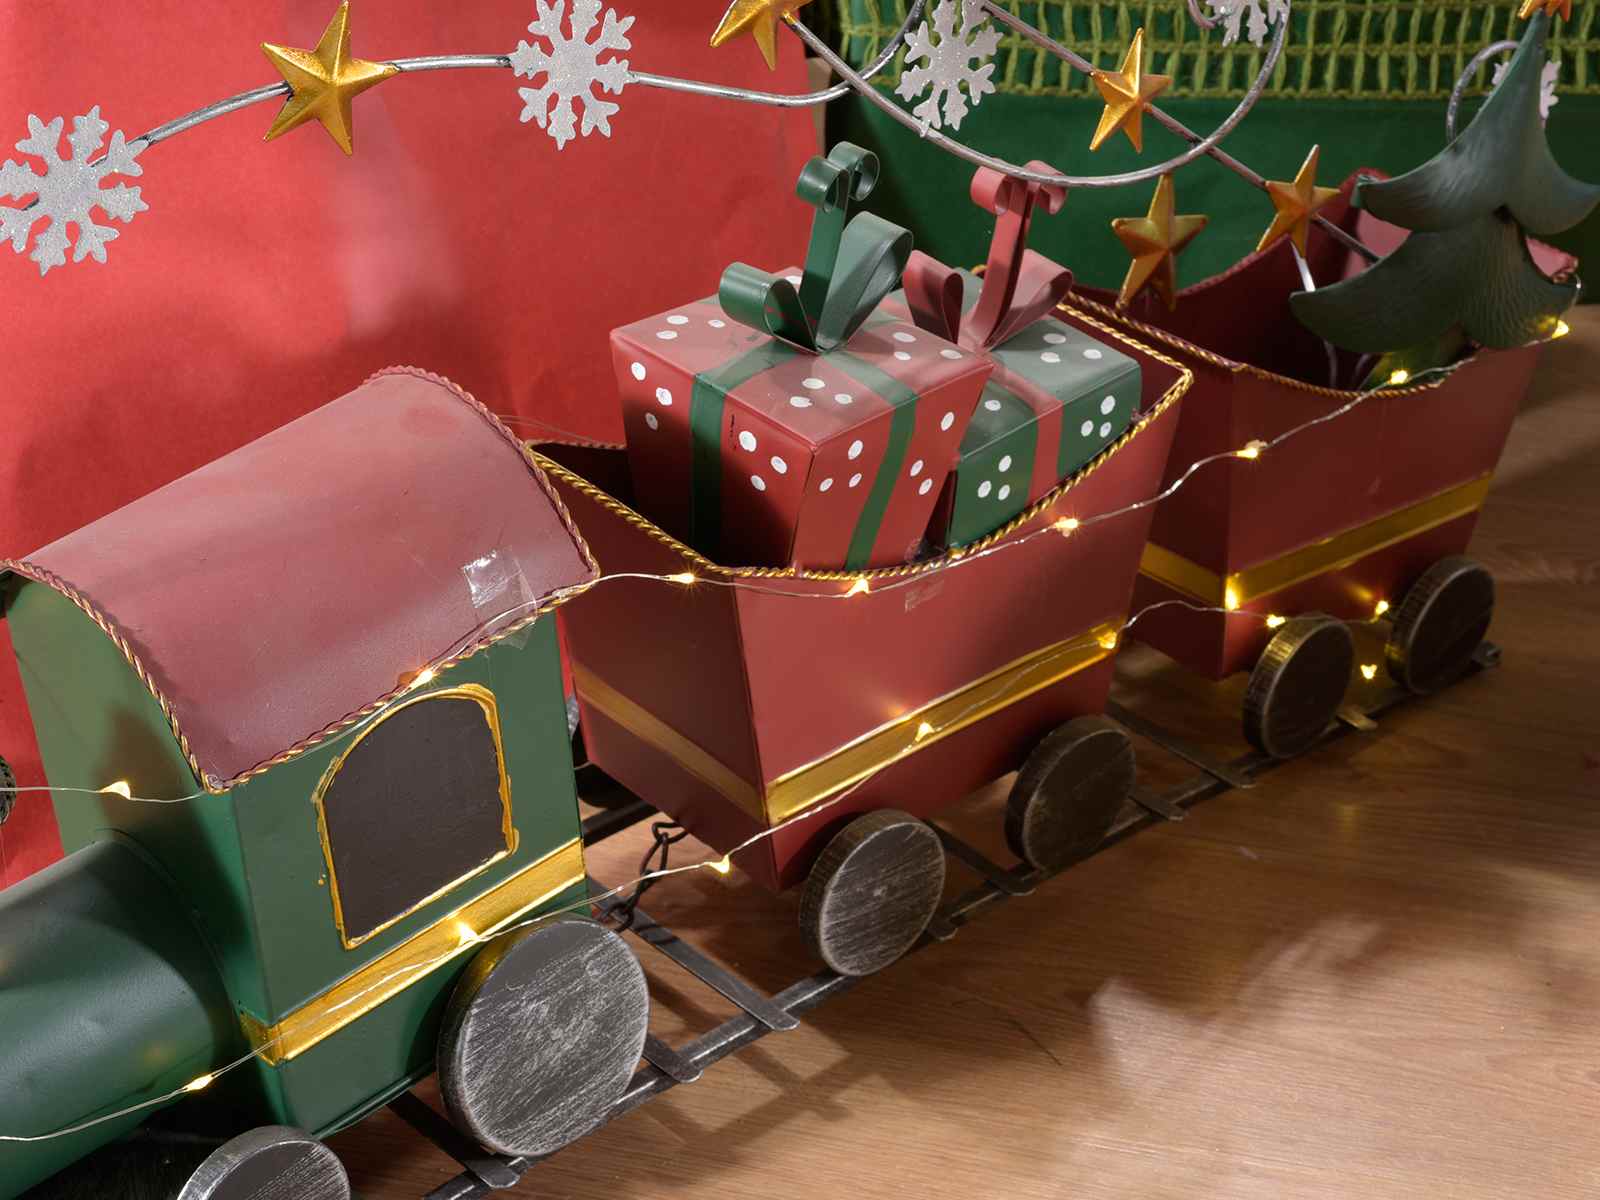 Tren navideño decorativo en metal coloreado con luces (53.24.41) - Art